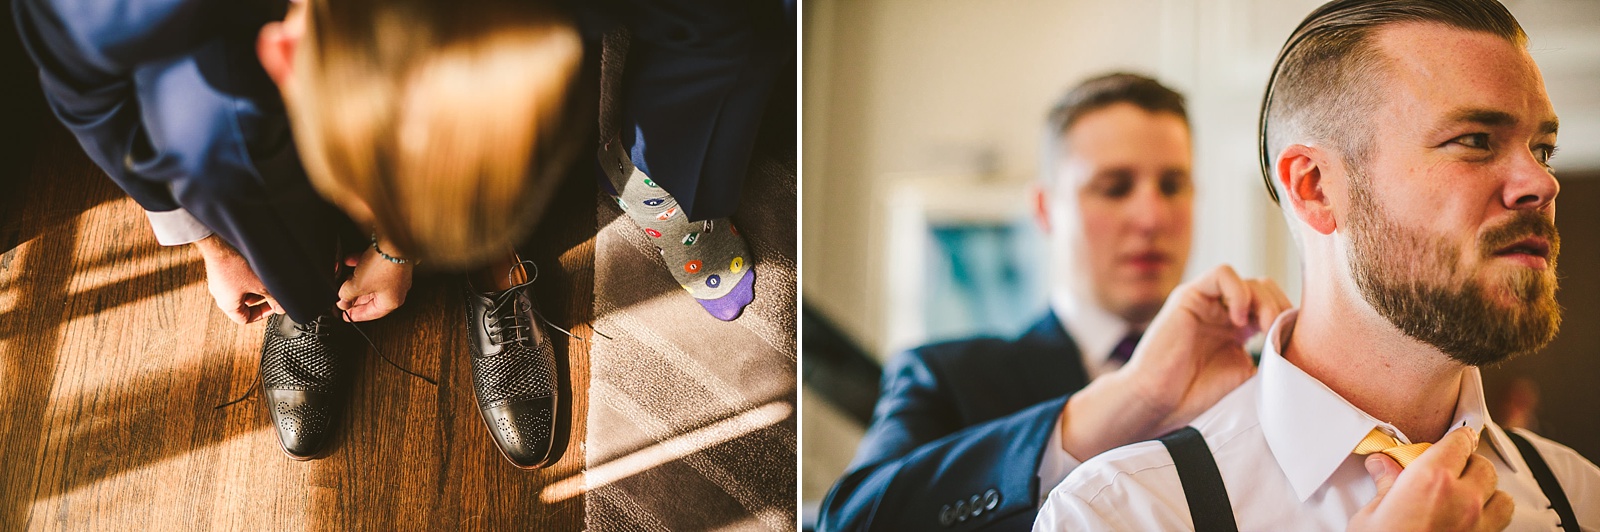 09 groom getting dressed - Hilton Chicago Wedding Photographer // Sarah + Aaron